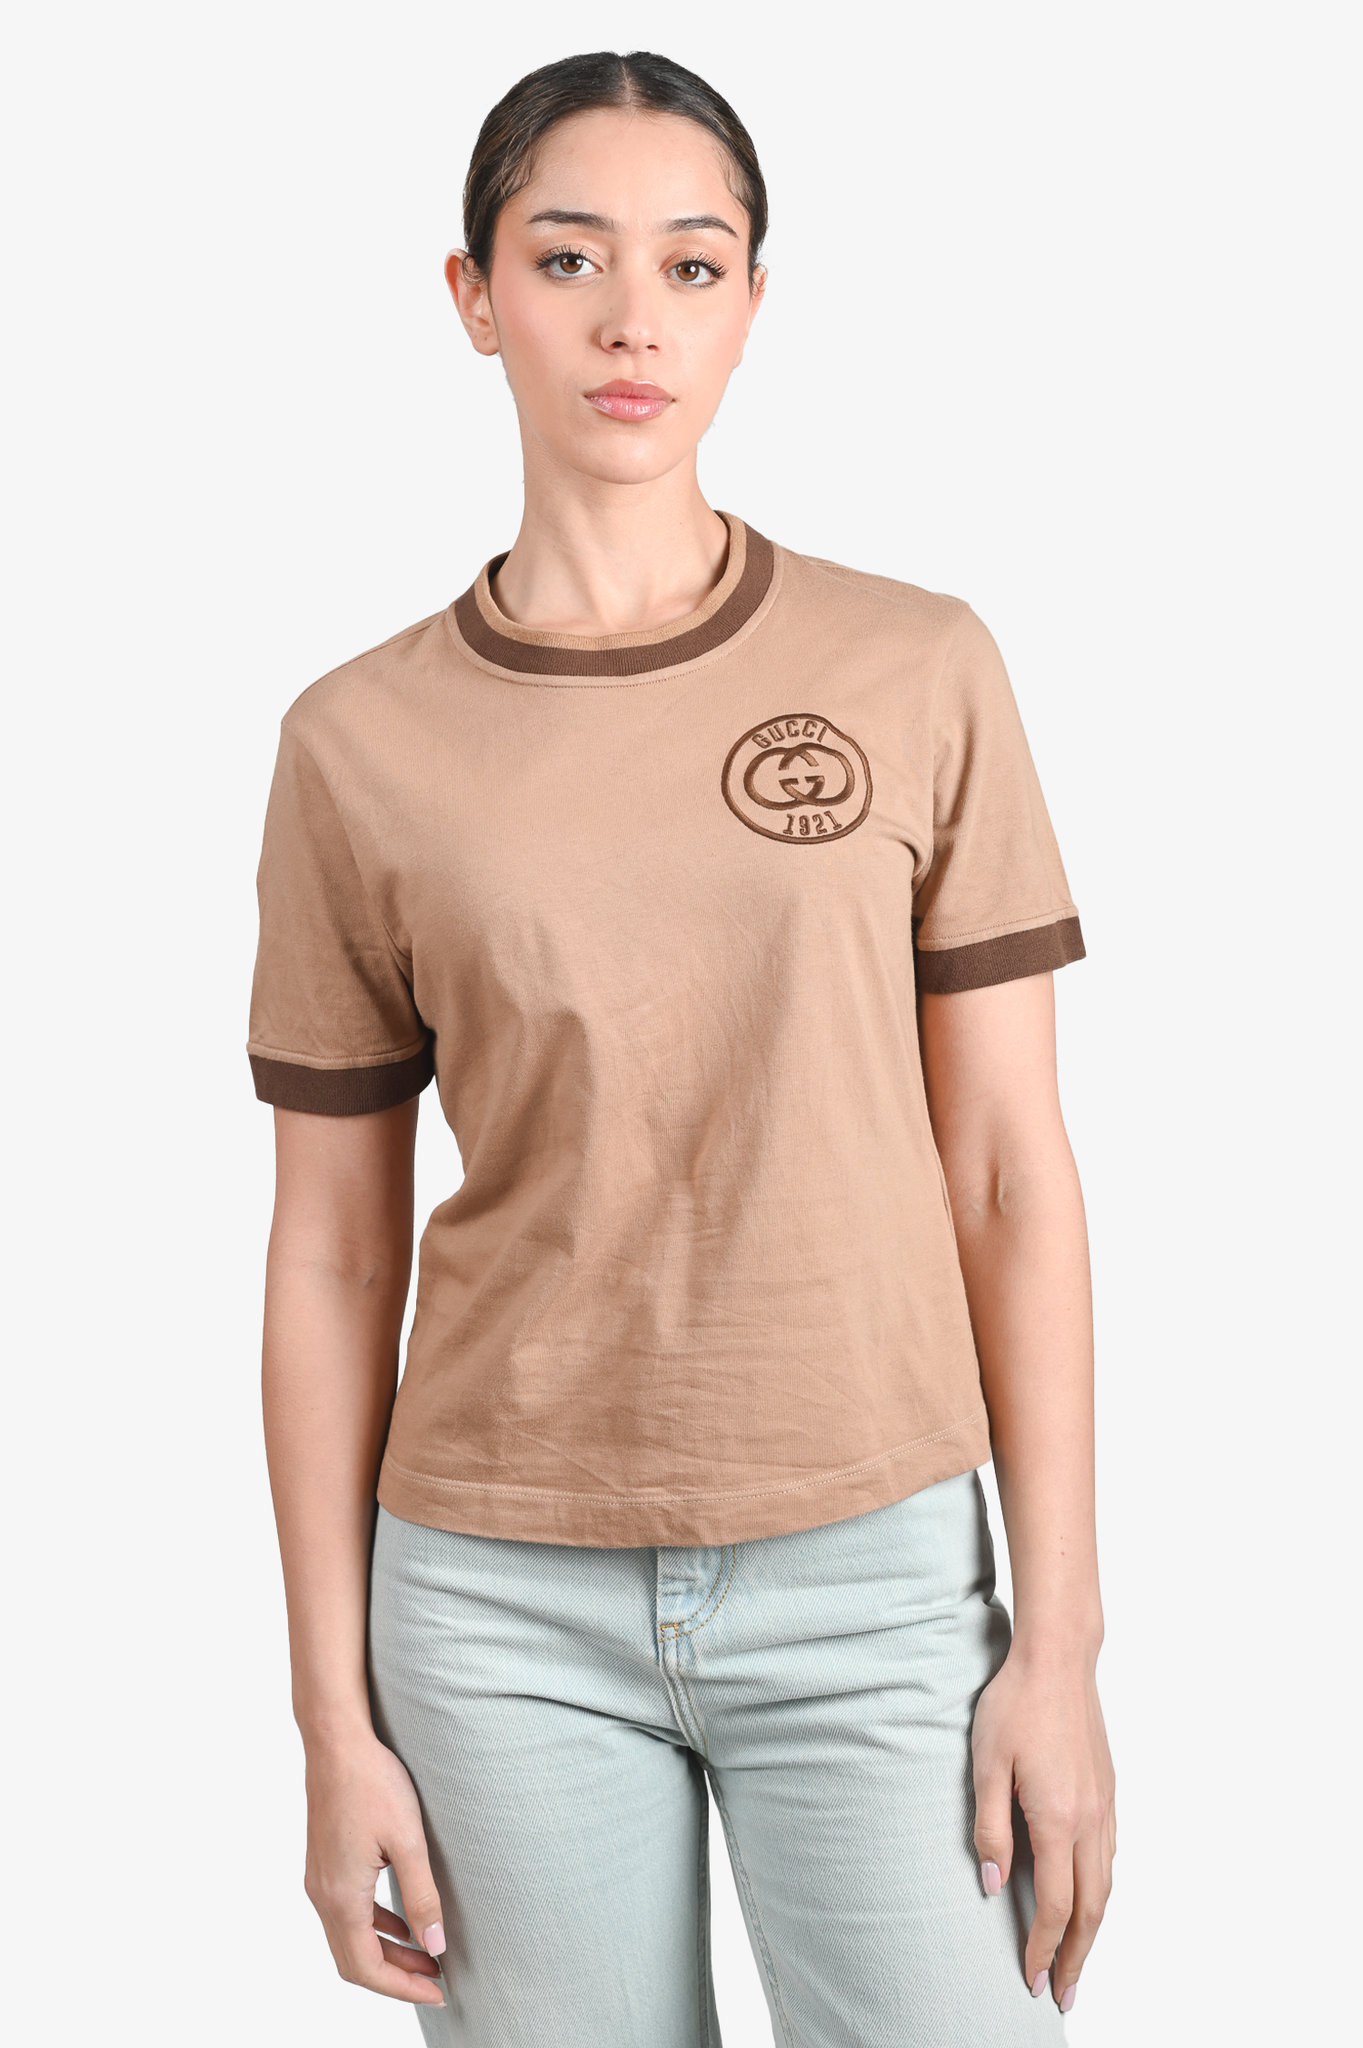 Gucci Bowling Shirt Japenese Acetate Size XL (46)